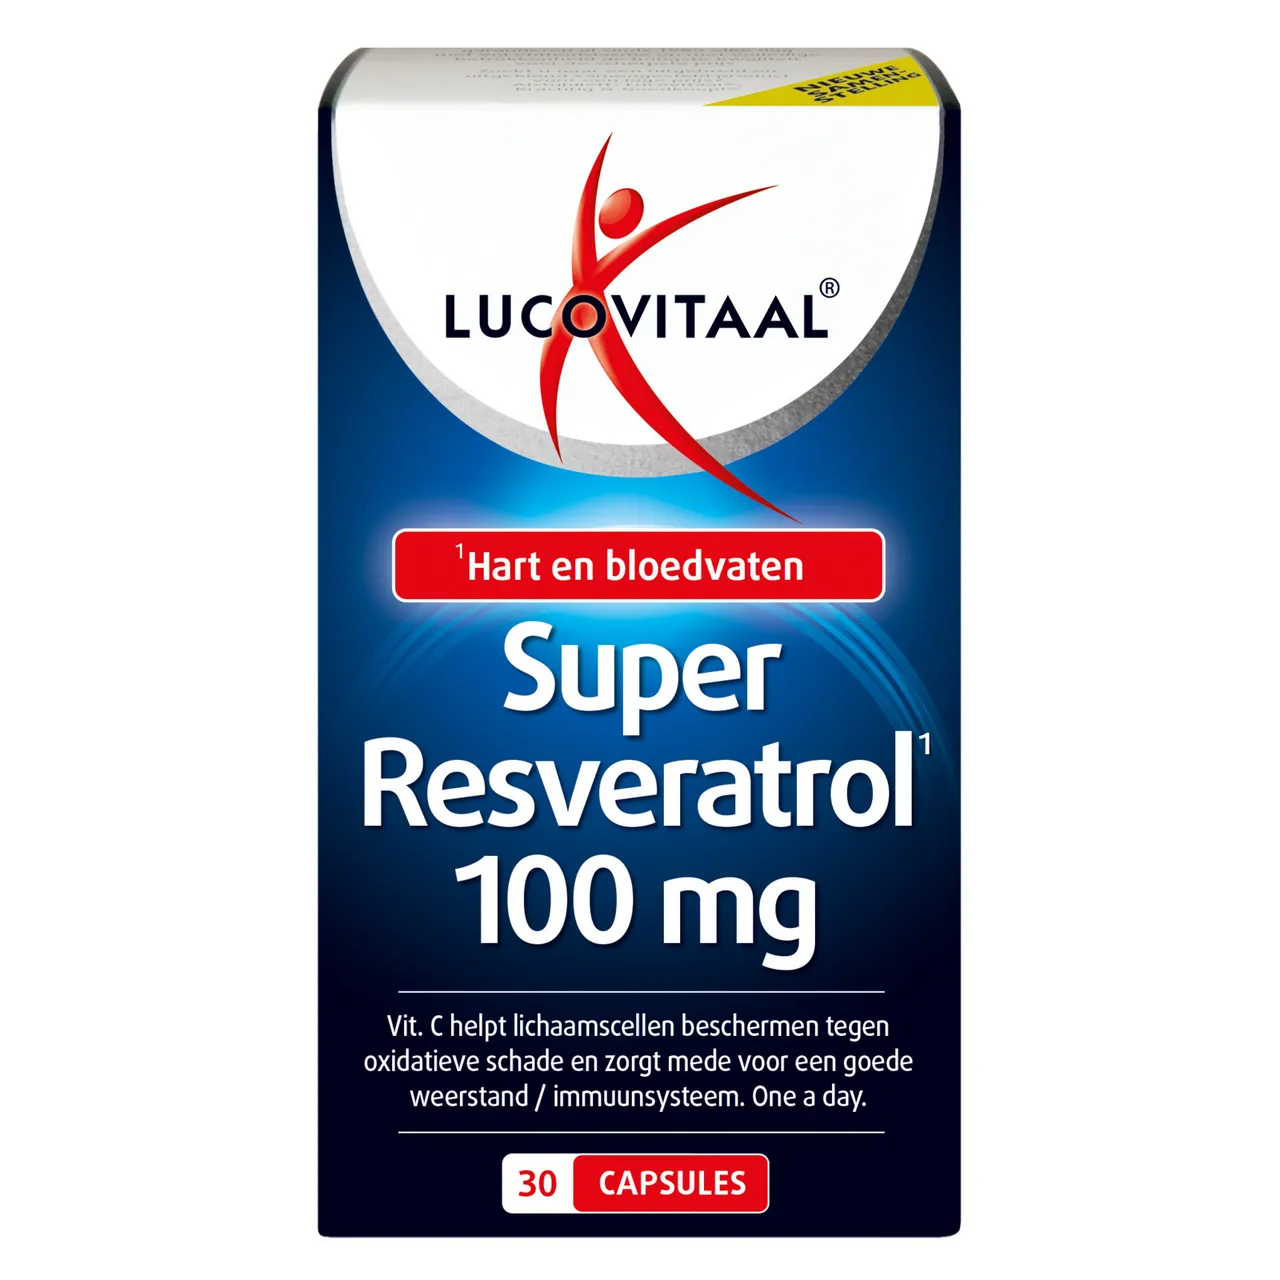 Lucovitaal Super Resveratrol 100mg Capsules